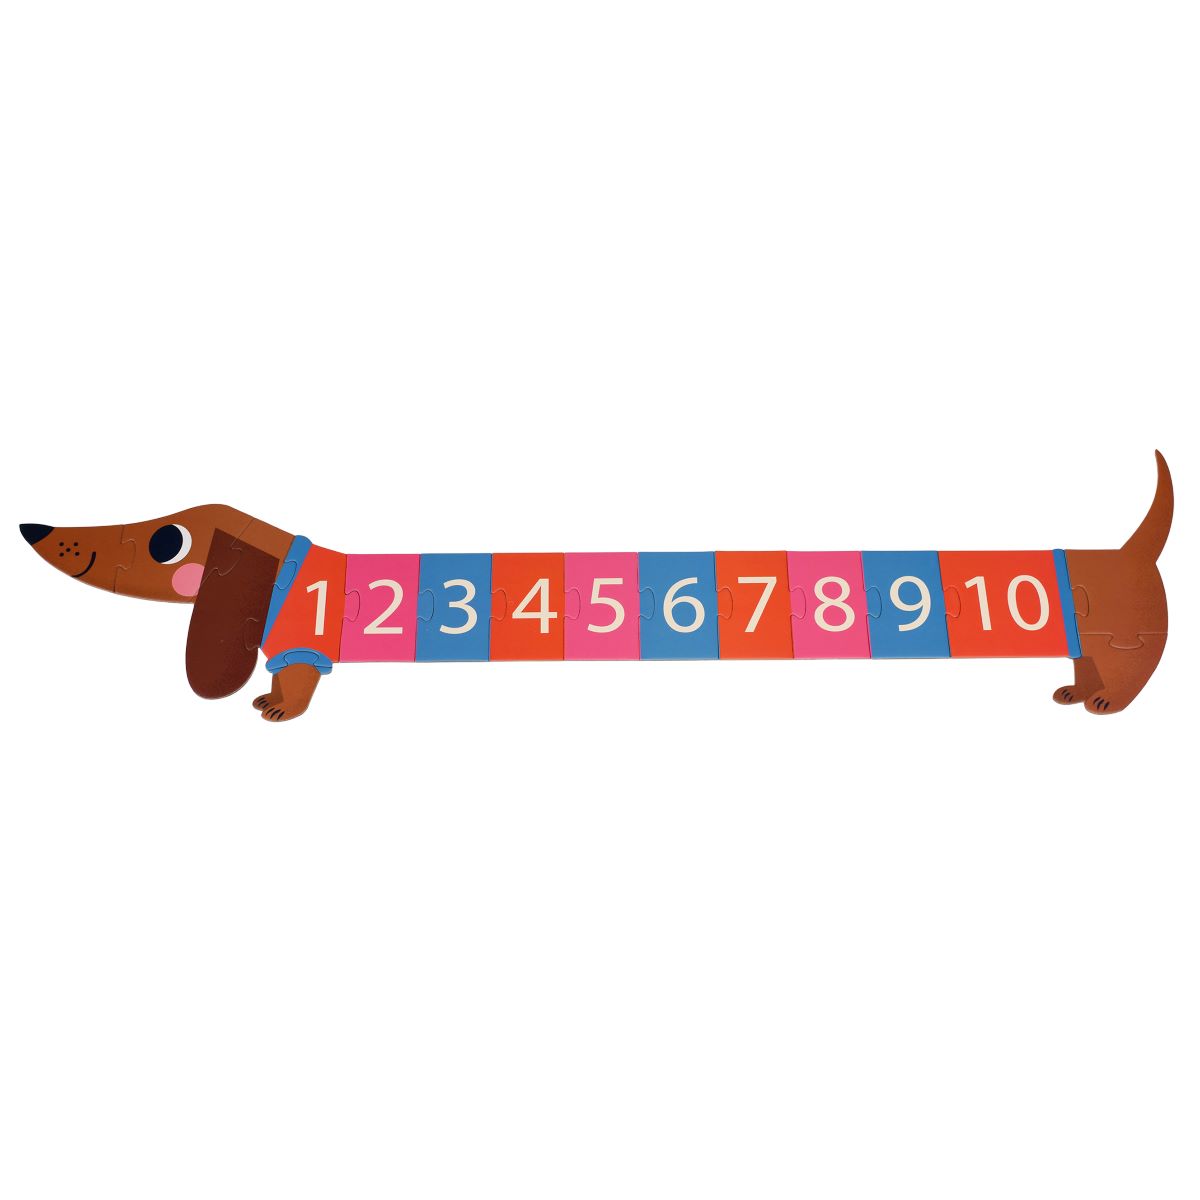 Floor puzzle - Sausage Dog